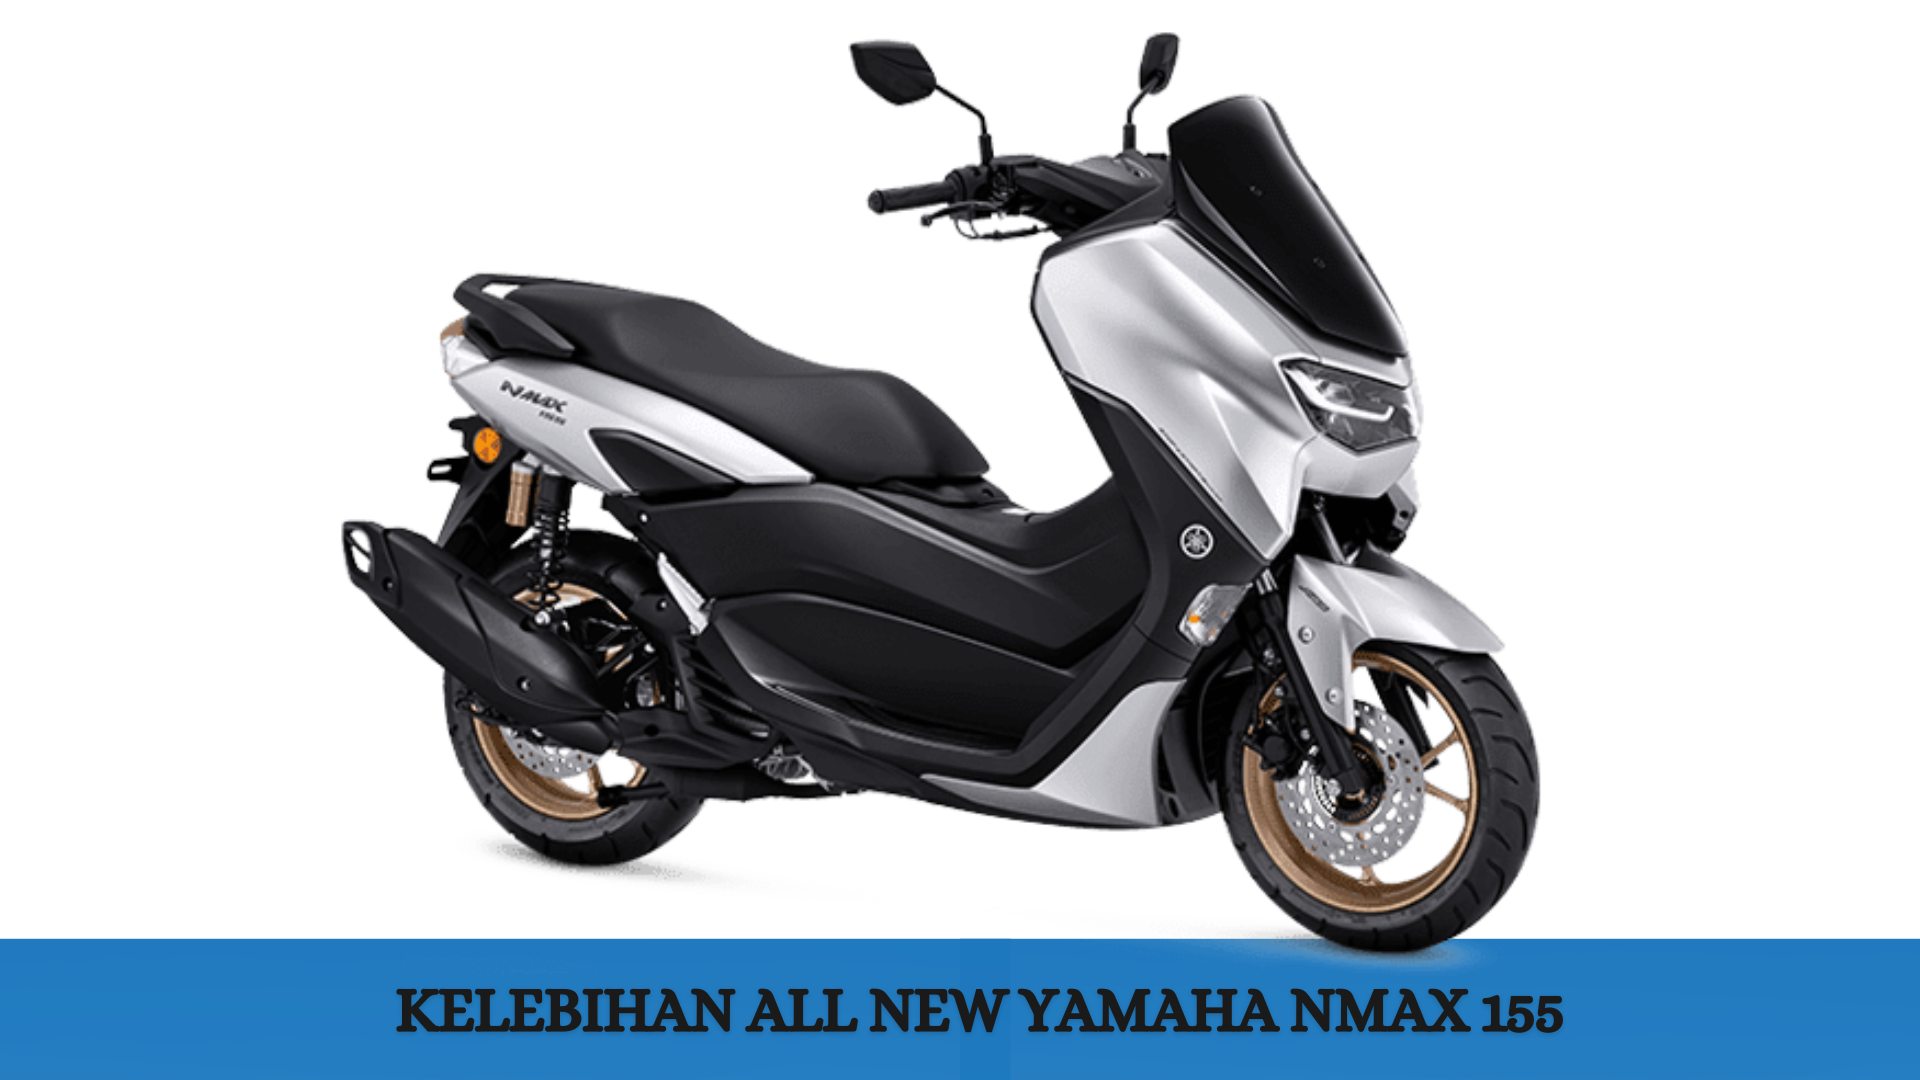 All New Yamaha Nmax 155, Skuter Maxi Berfitur Canggih dengan Pilihan Warna Khas Gen Z